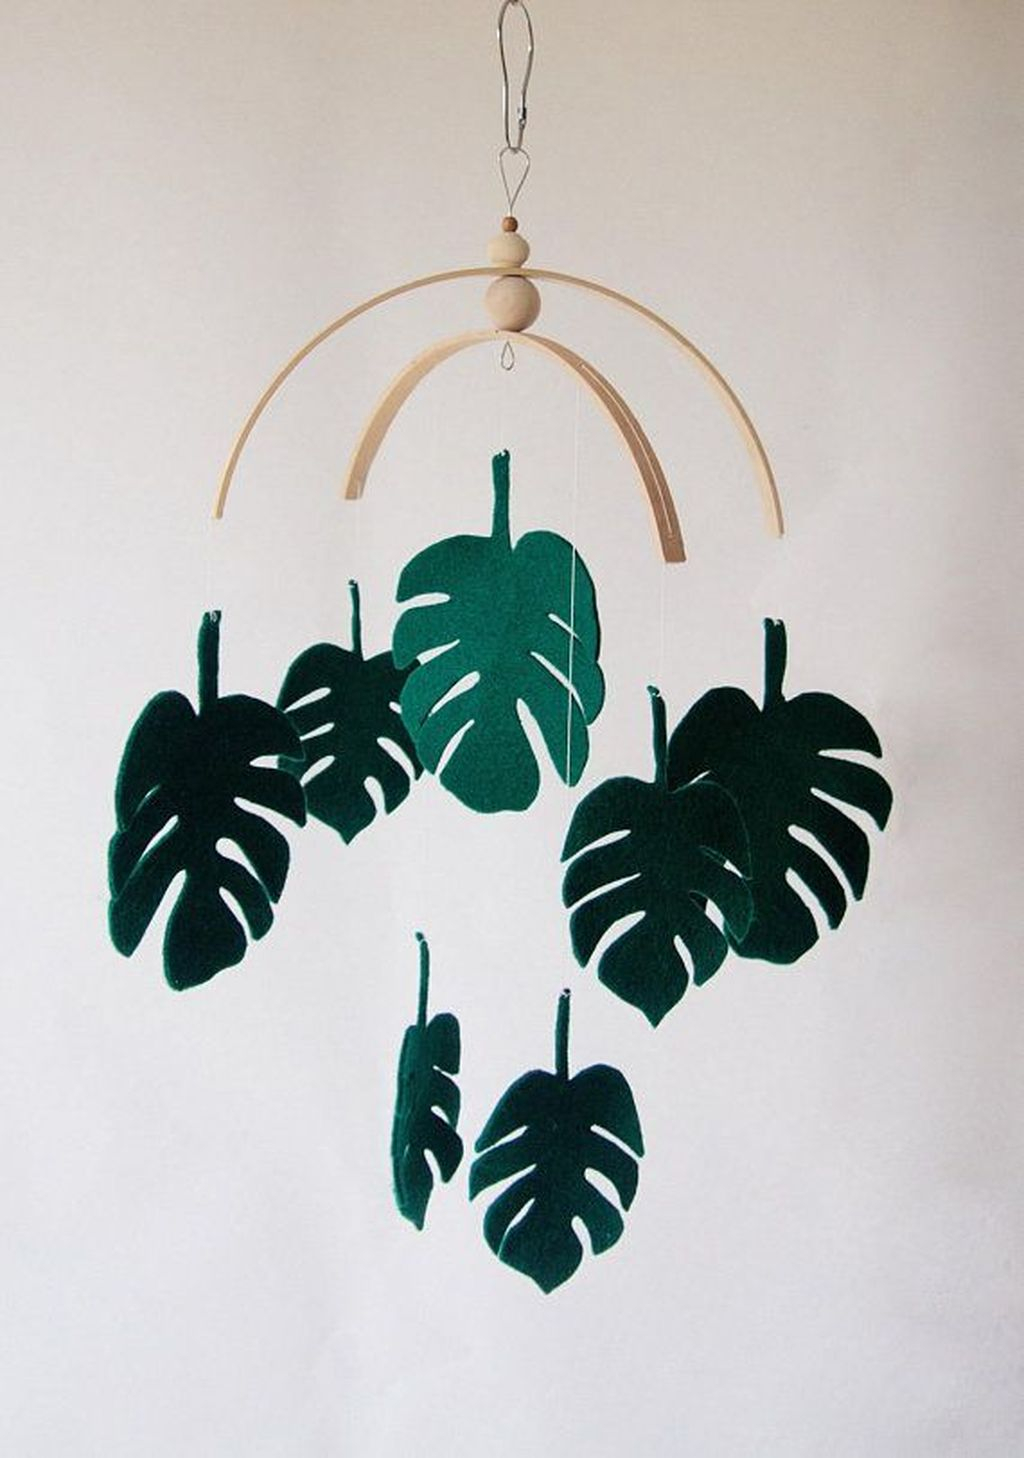 Splendid Tropical Leaf Decor Ideas For Home Design 02